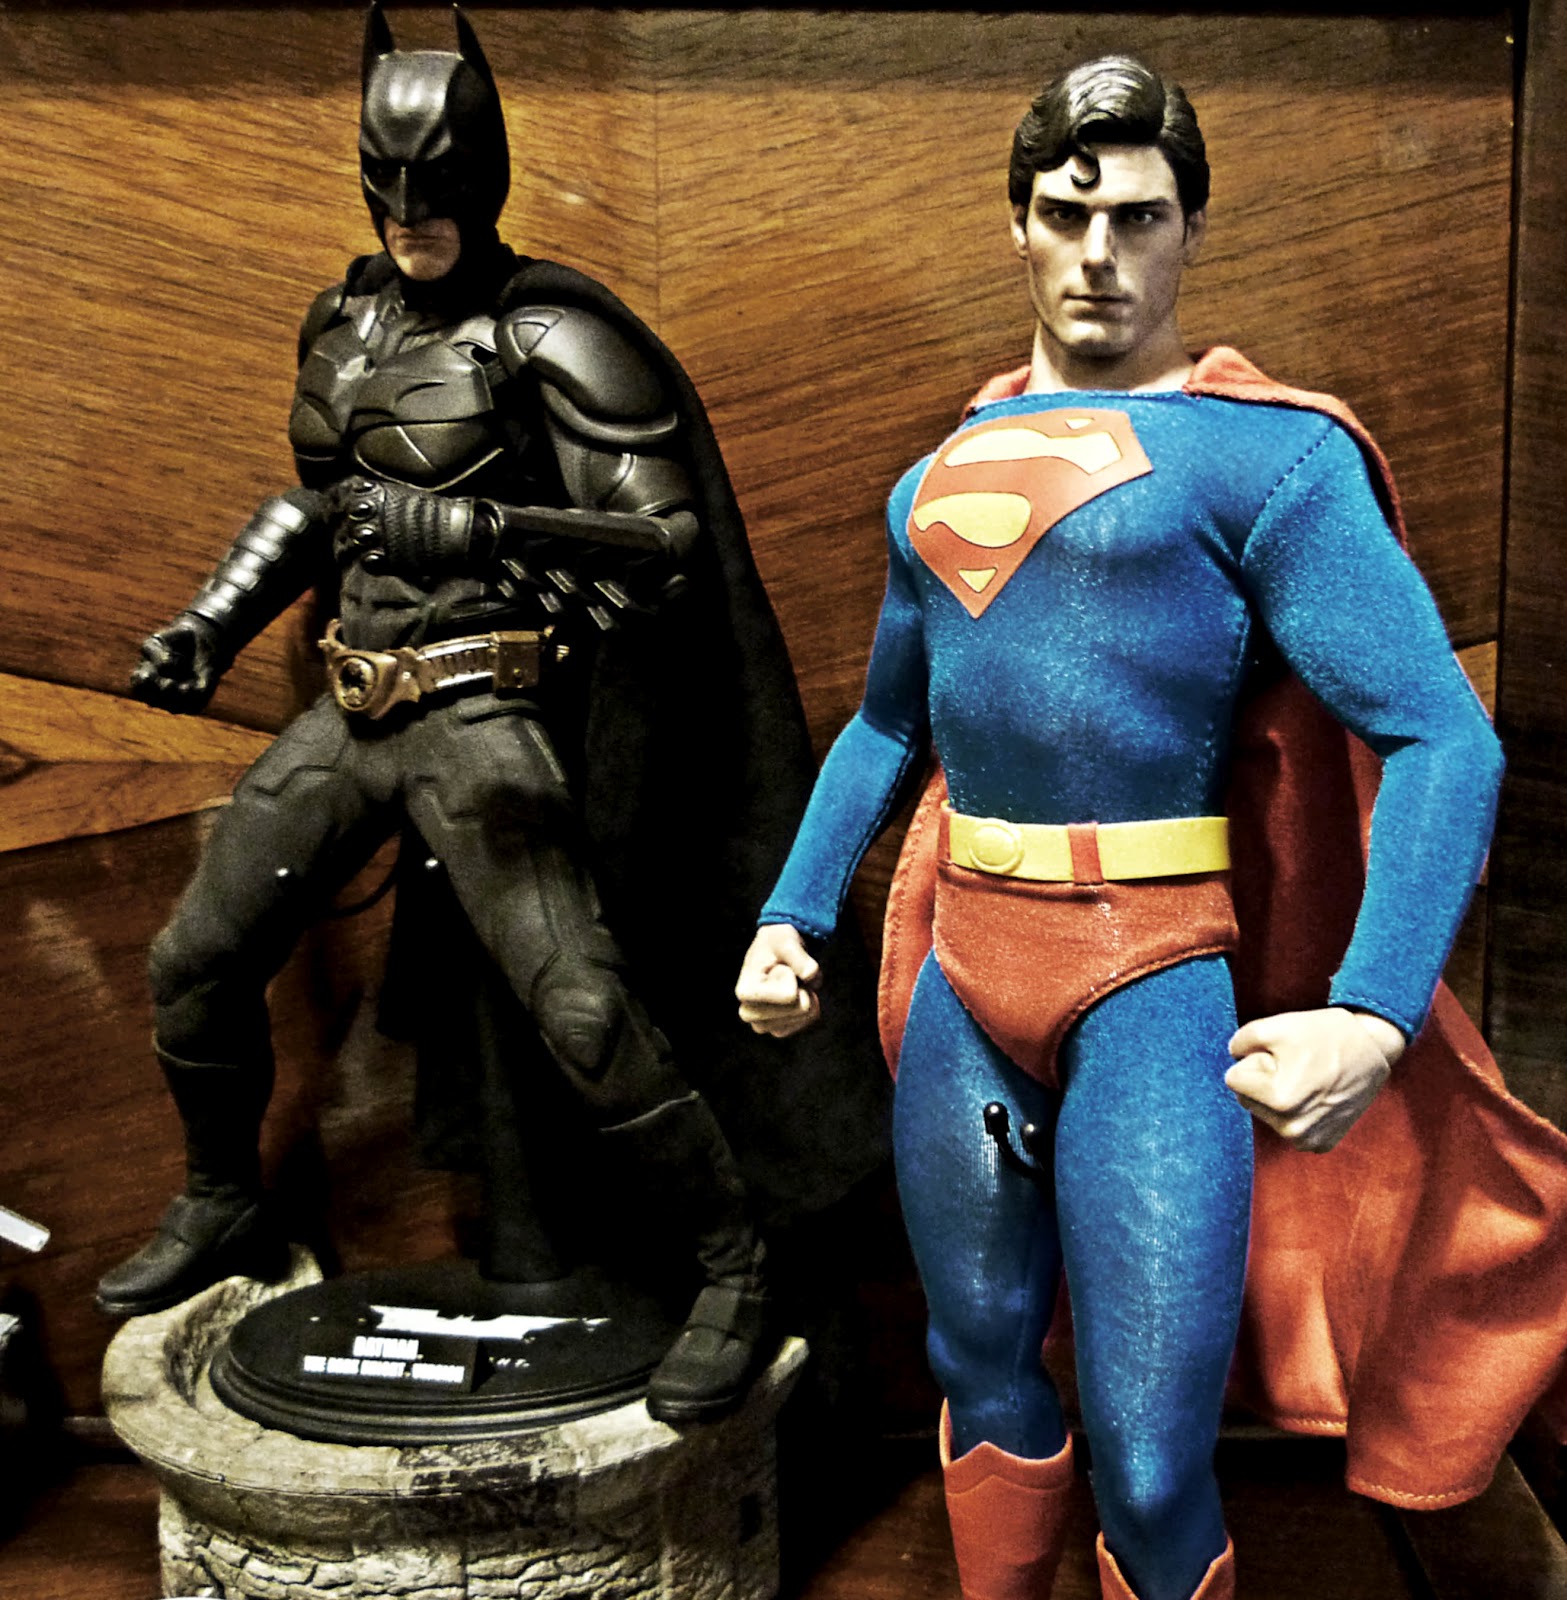 [HOT TOYS] Superman Christopher Reeve - LANÇADO!!! - Página 2 Hot+toys+(13)